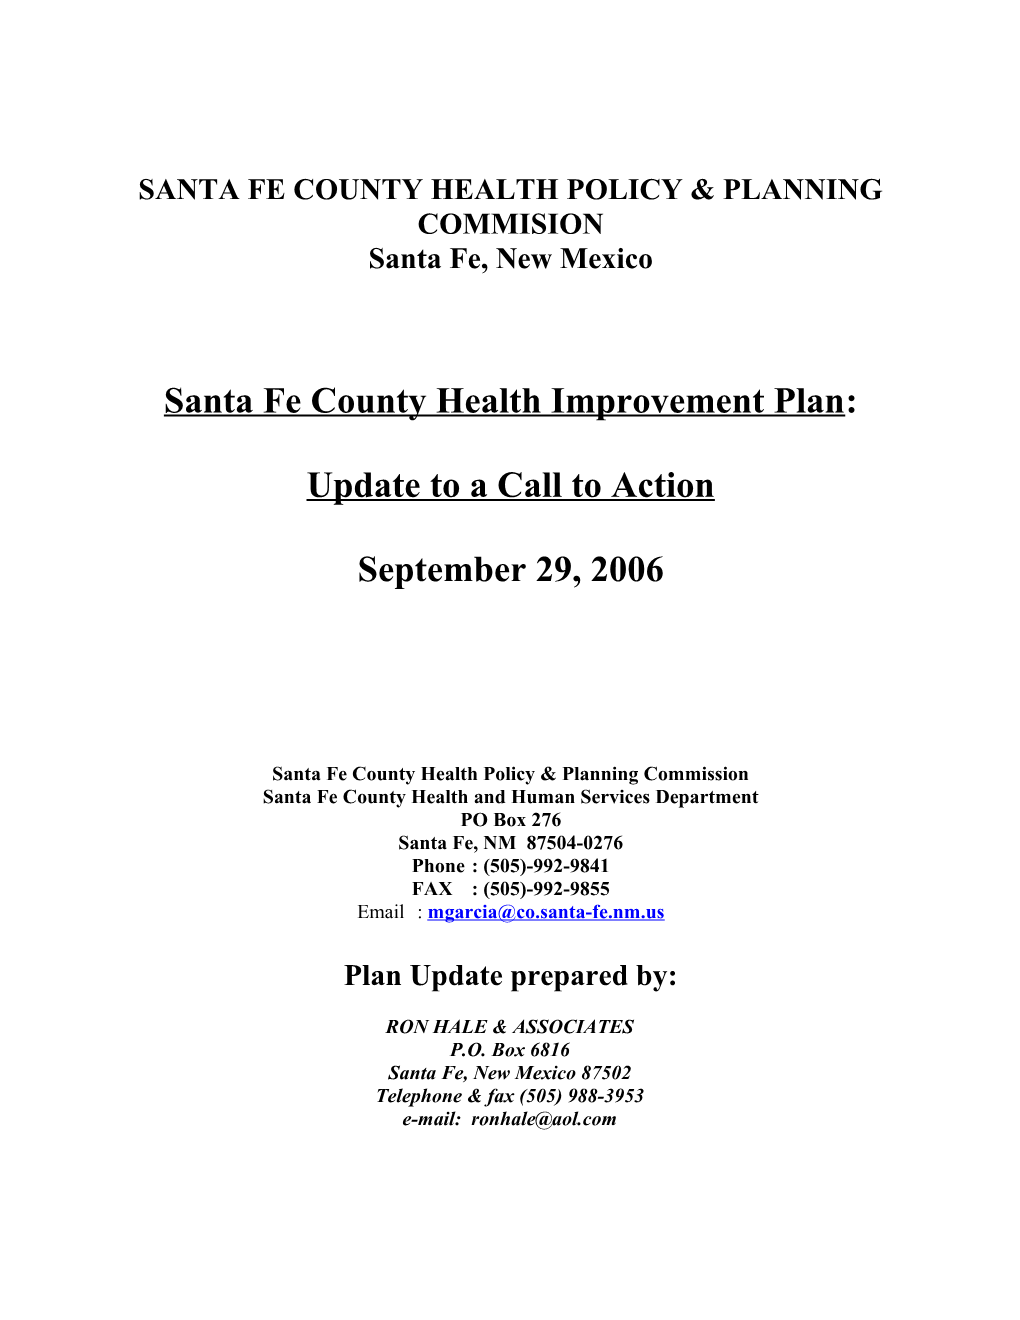 Santa Fe County Health Improvement Plan